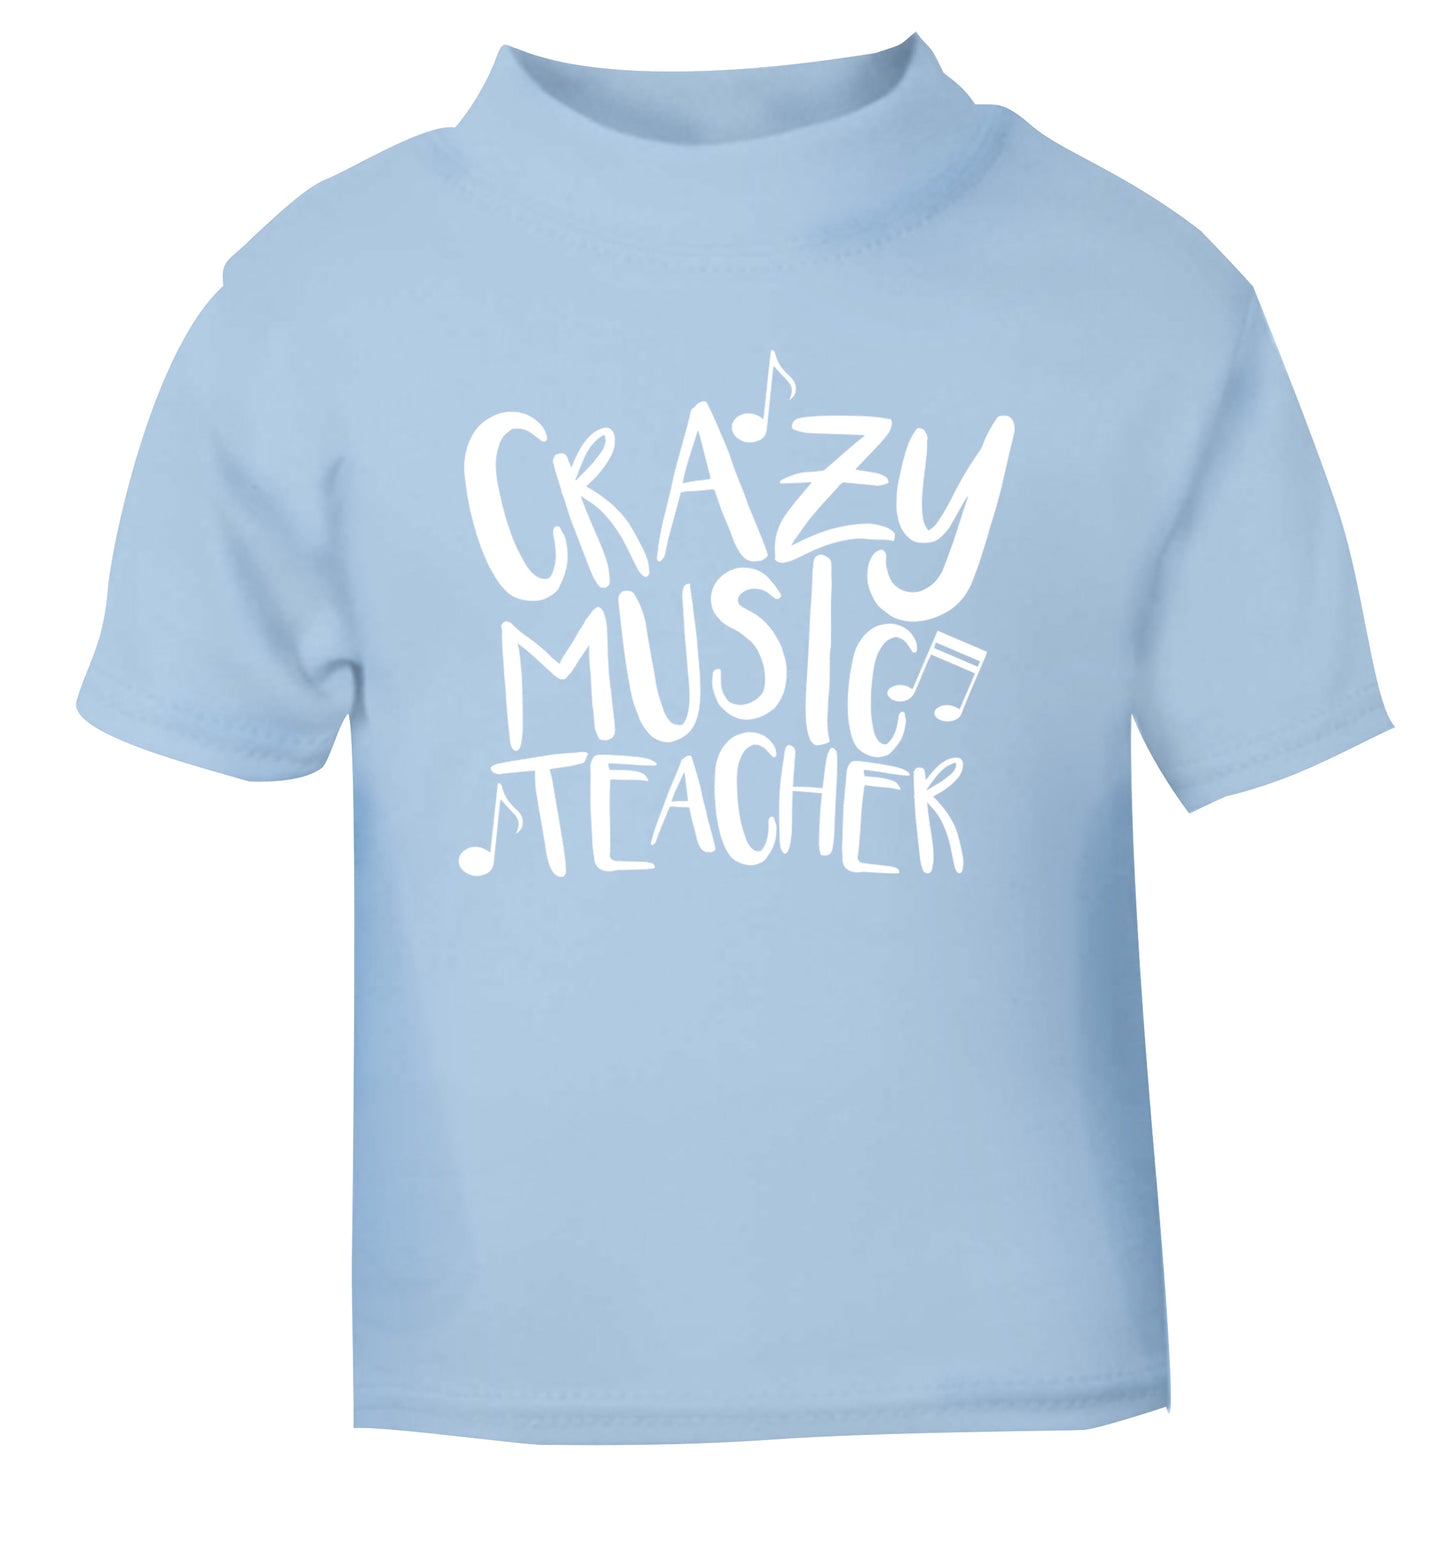 Crazy music teacher light blue Baby Toddler Tshirt 2 Years